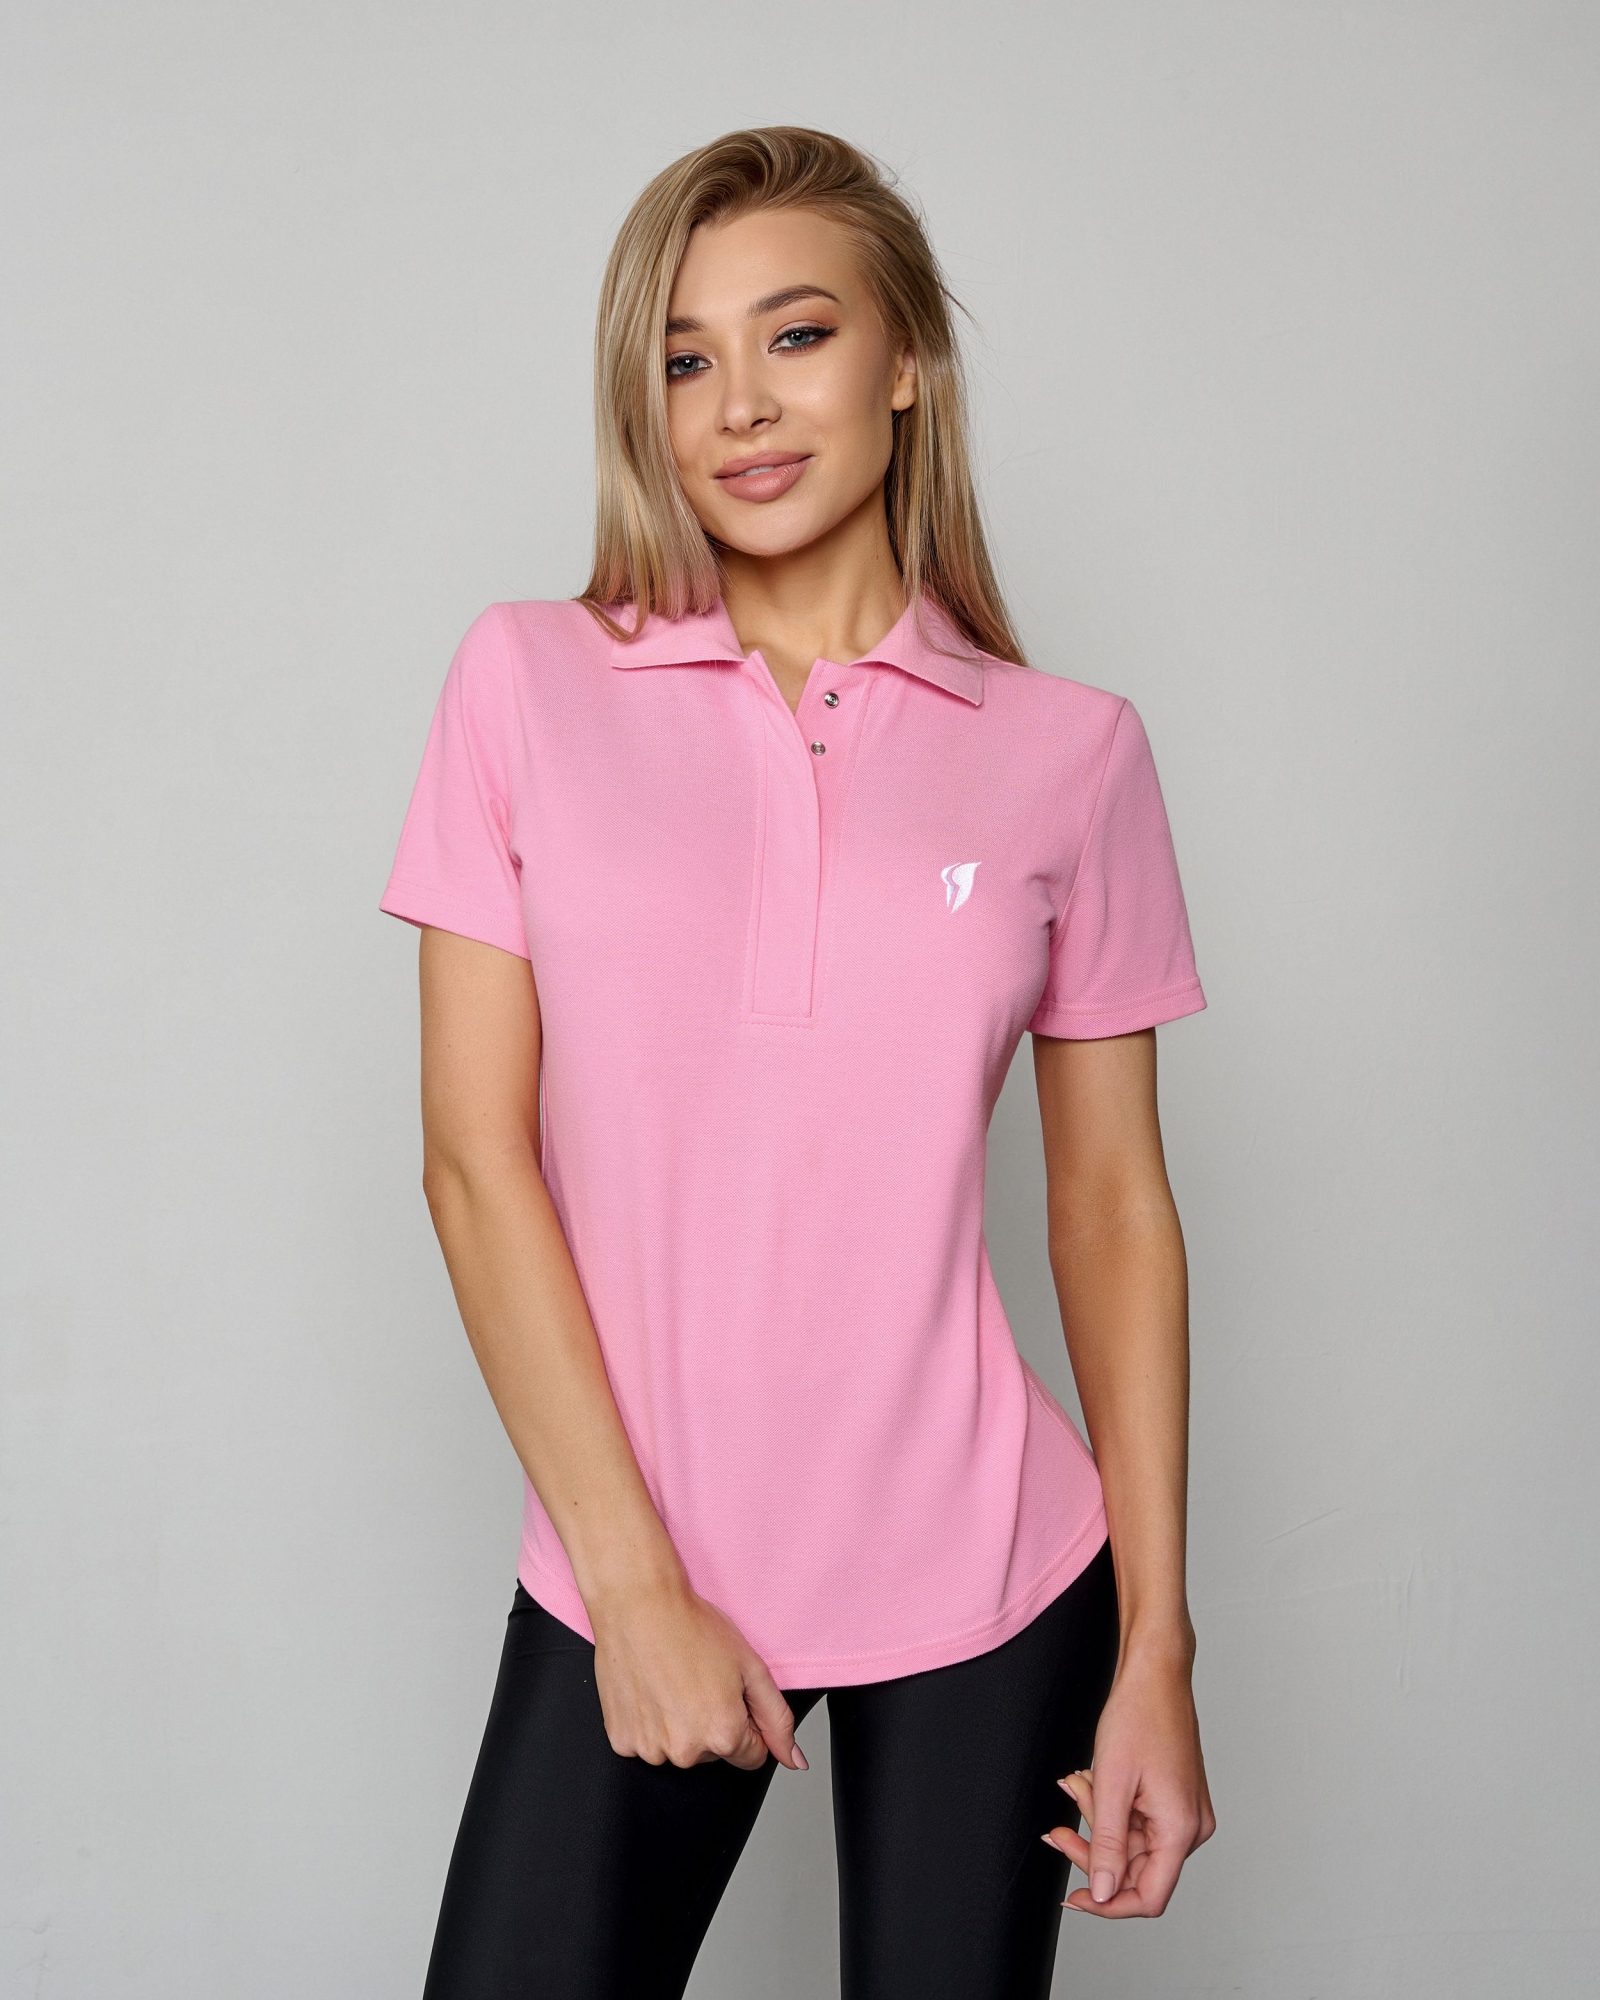 Bona Fide: T-Shirt Polo "Baby Pink" фото 7